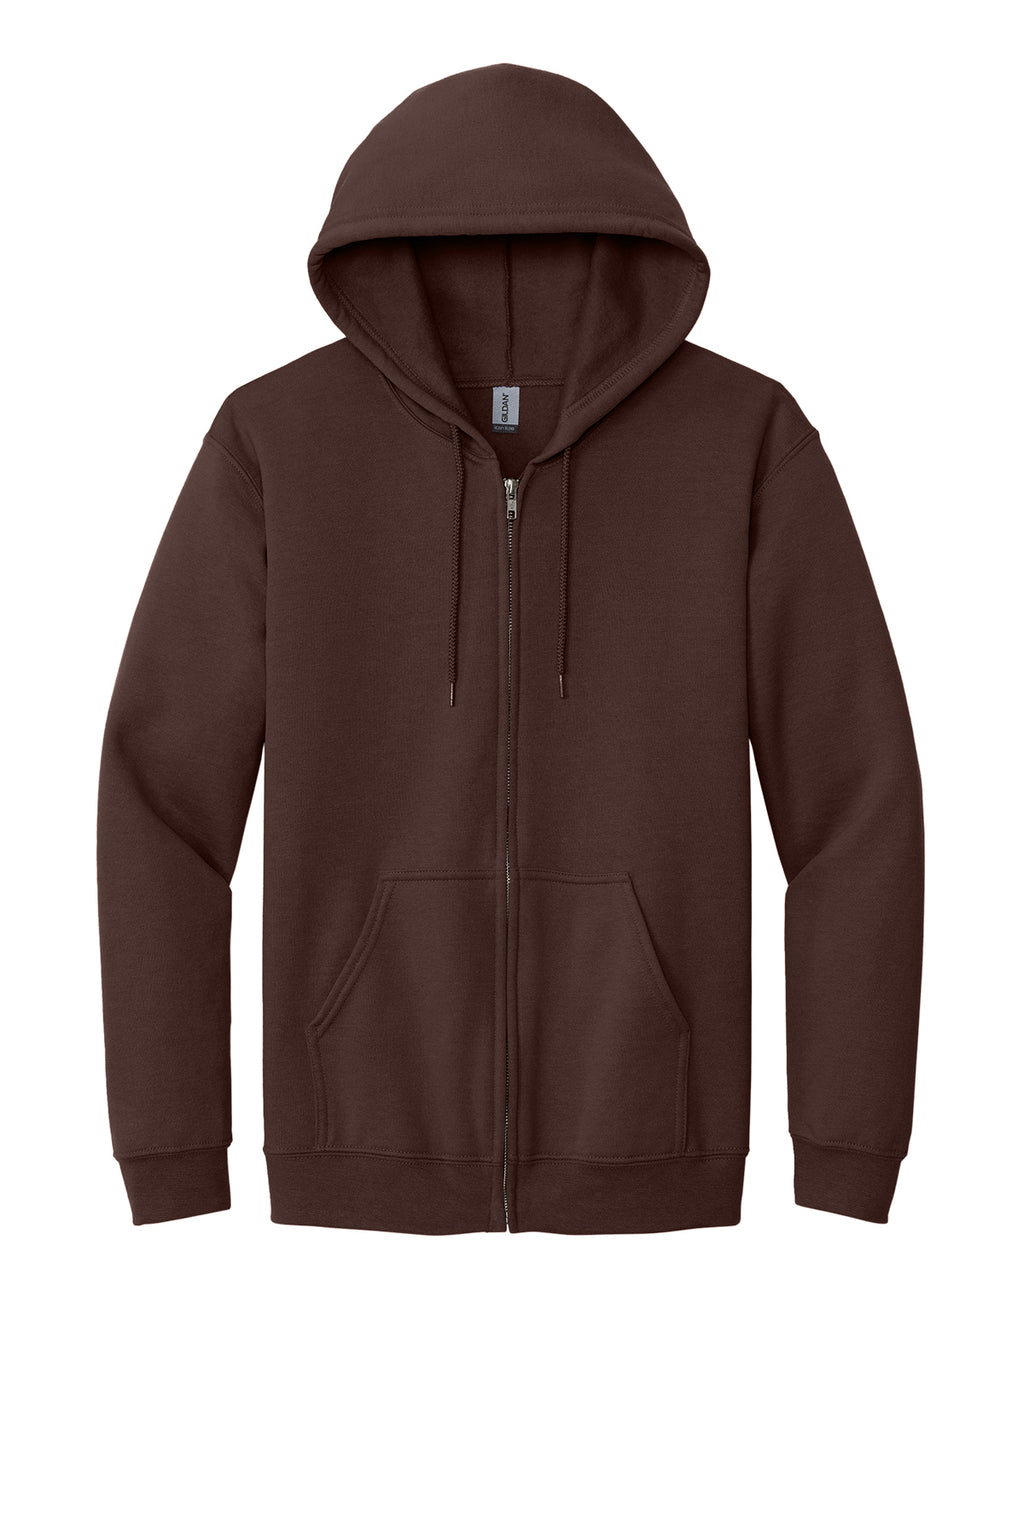 Gildan Full-Zip Hooded Sweatshirt Mens/Unisex Hoodies Carolina Dark Chocolate